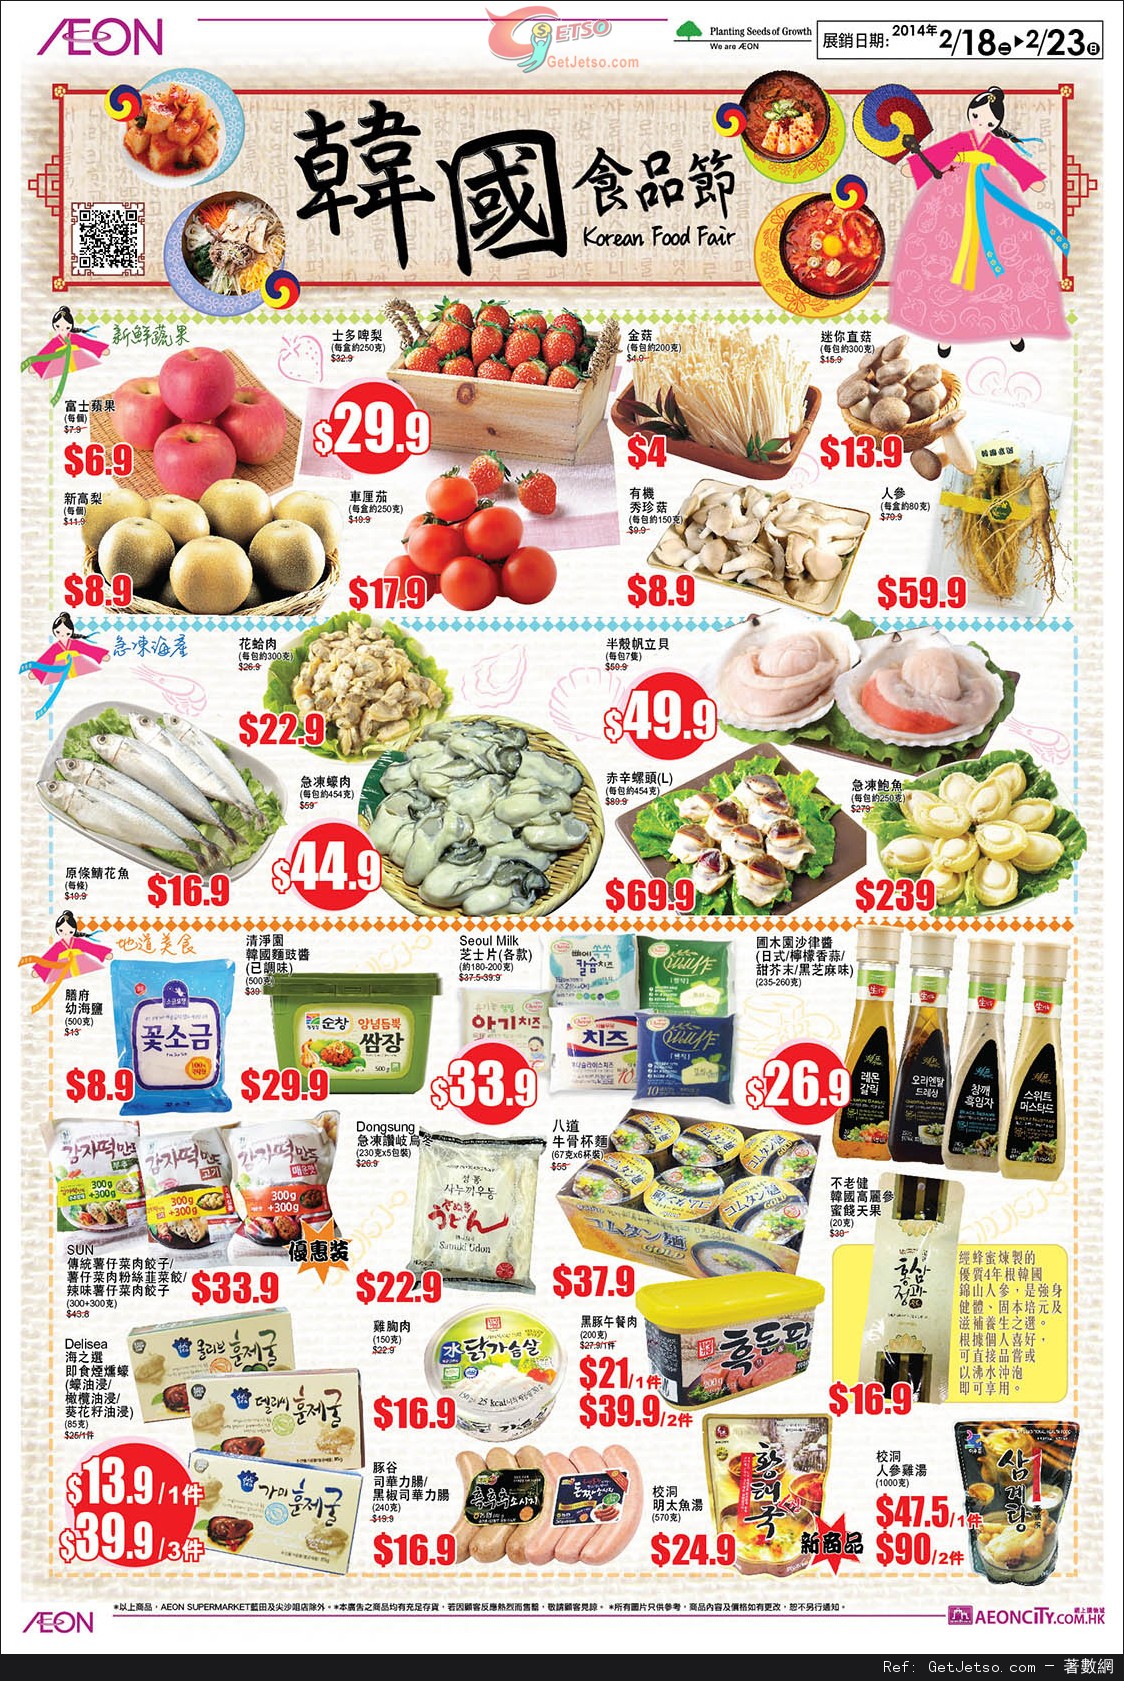 AEON 韓國食品節購物優惠(至14年2月23日)圖片2